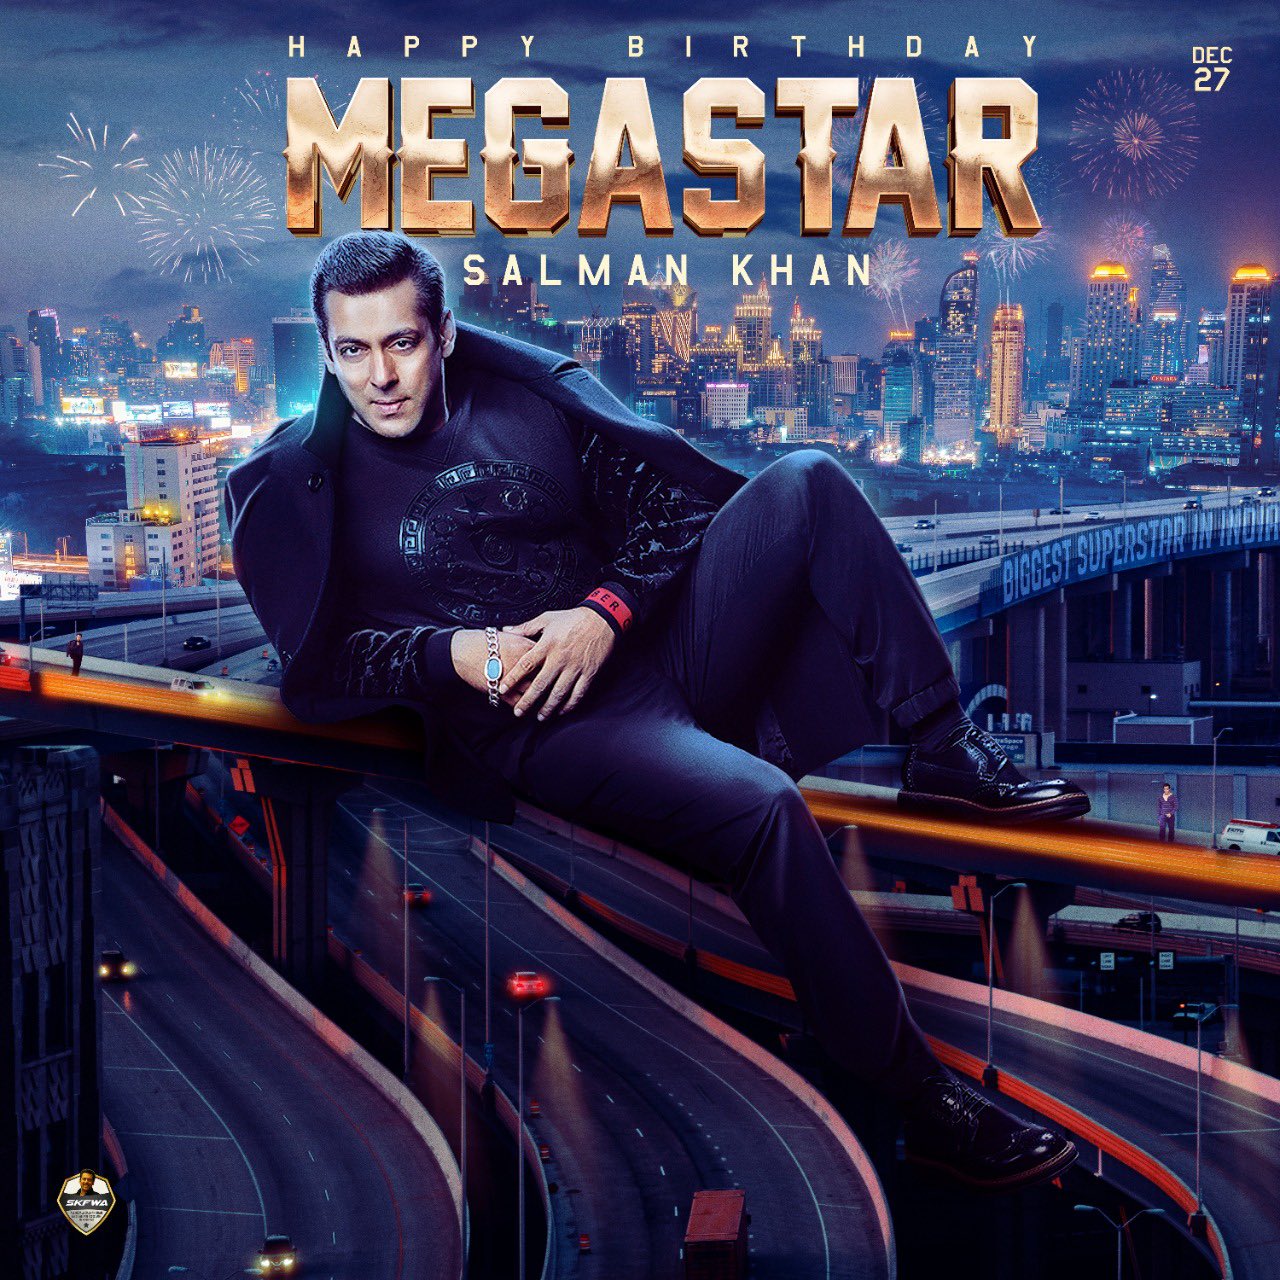 Happy birthday My Lovely Megastar The Salman Khan 